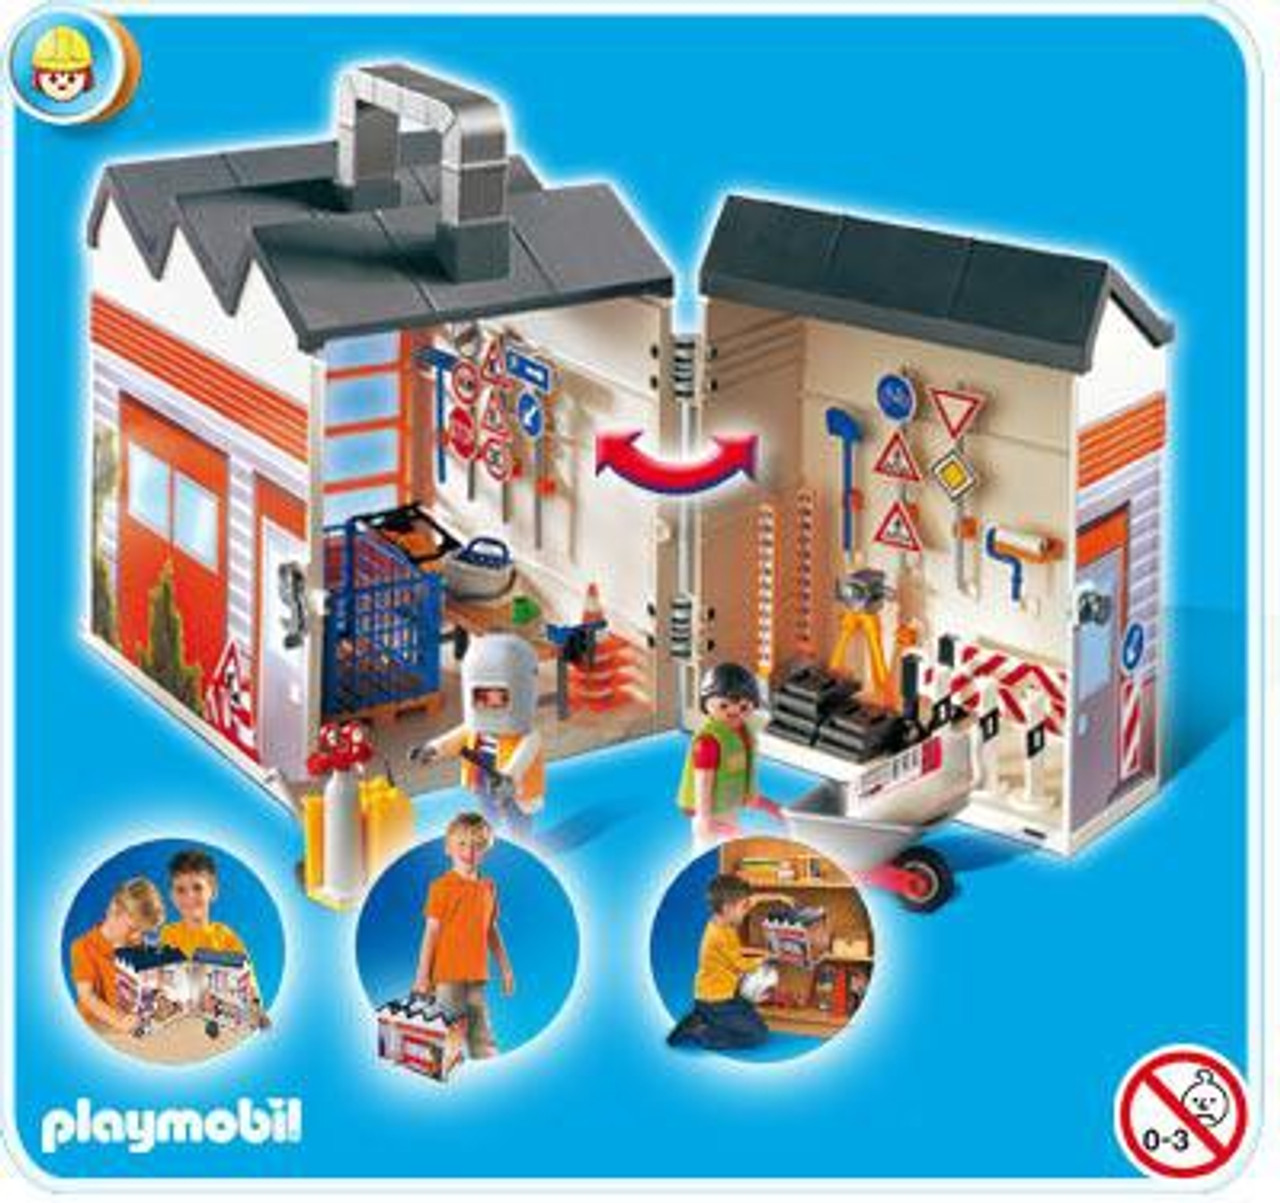 Playmobil Take Along Construction Set 4043 - ToyWiz